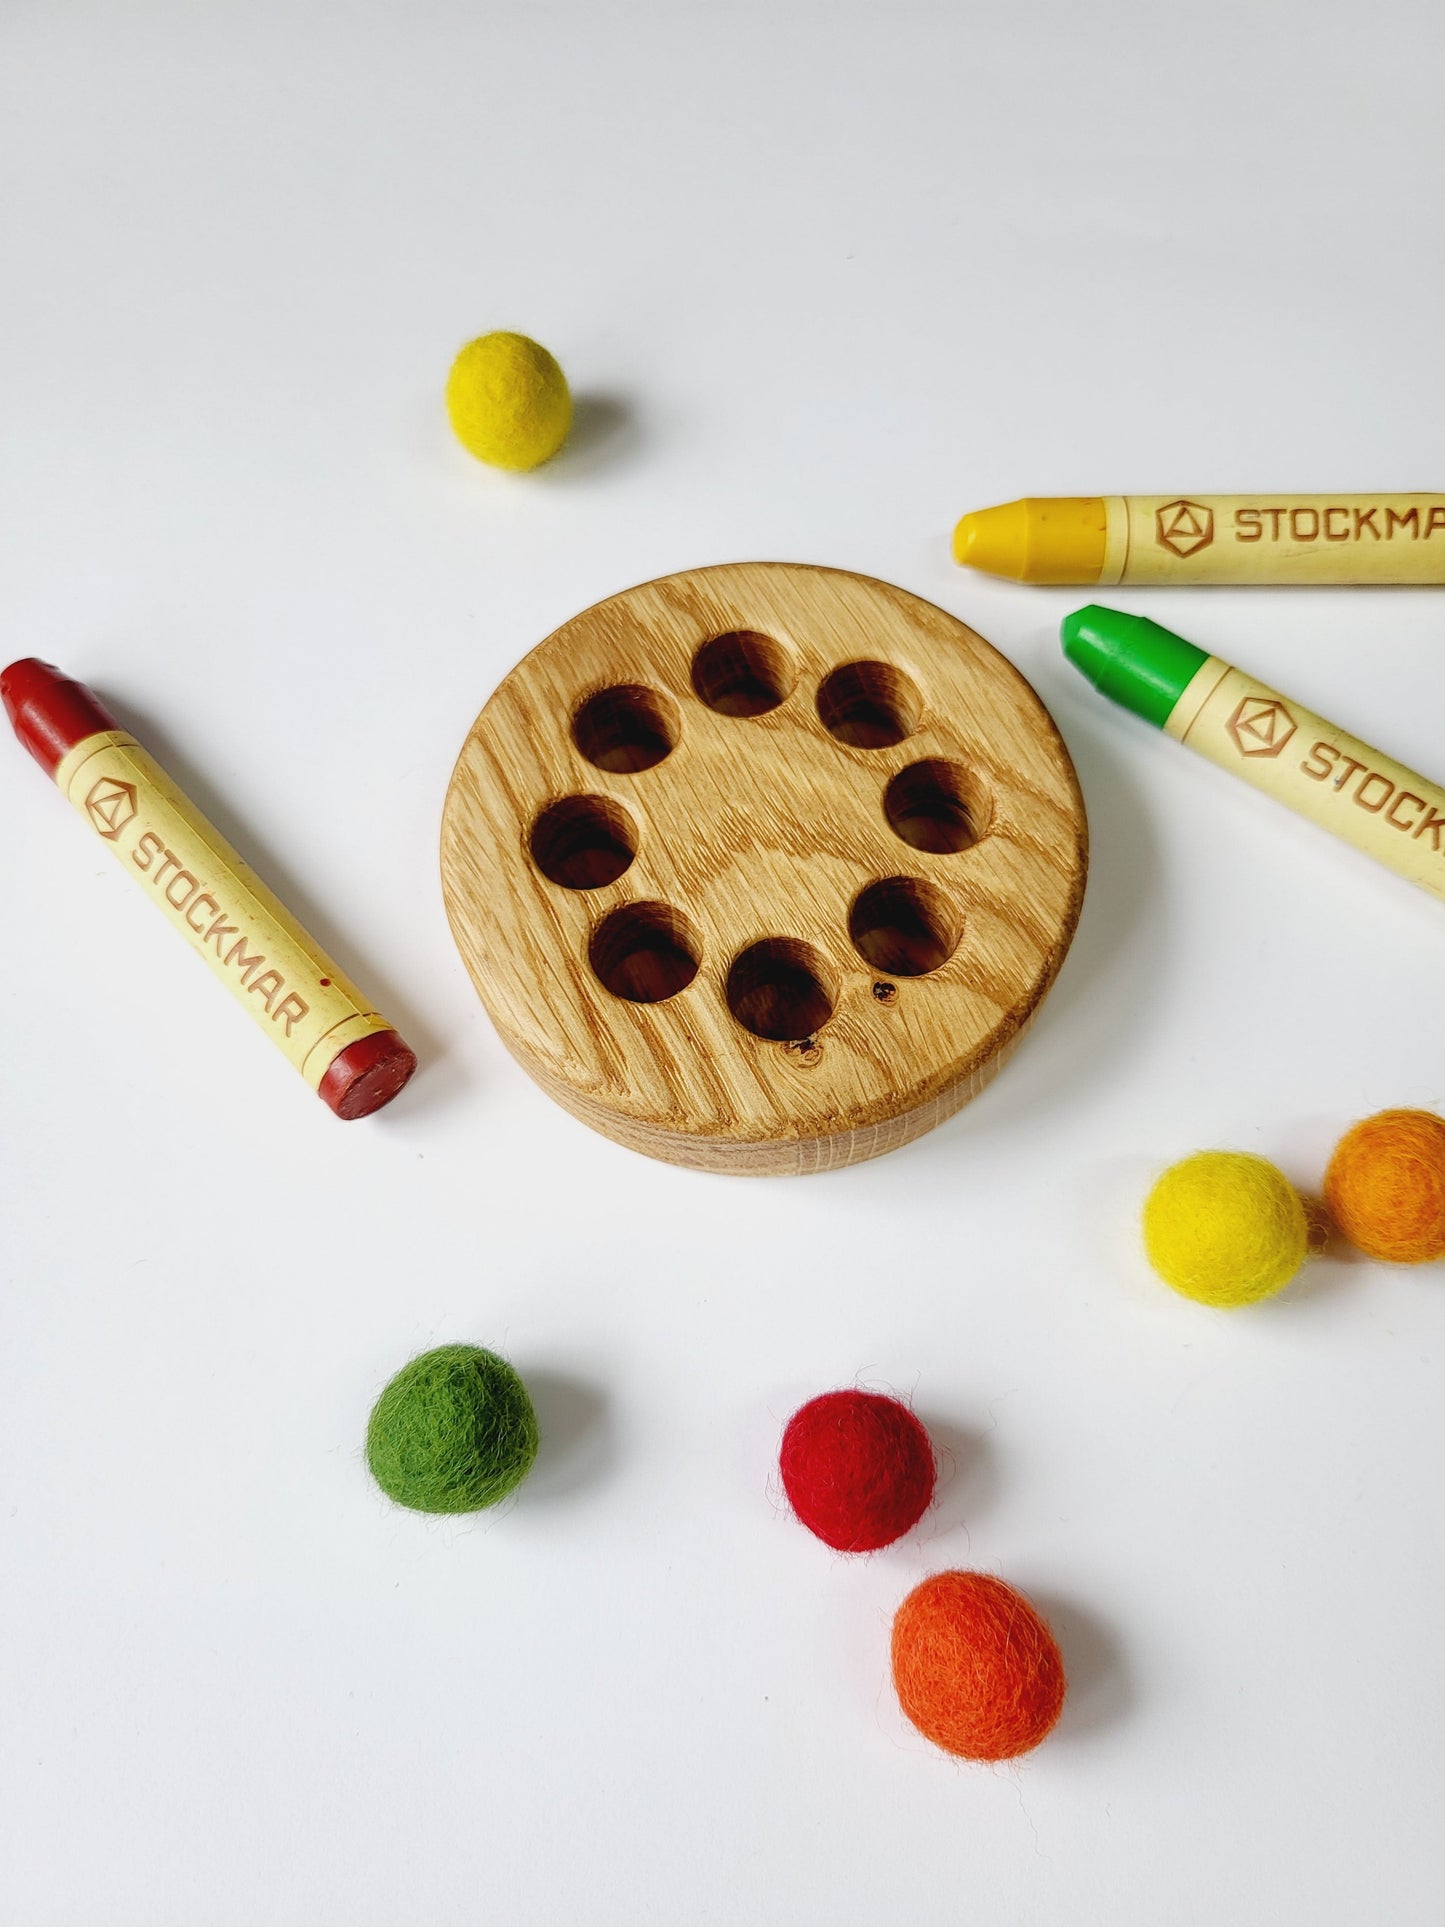 Stockmar crayon holder for 8 sticks